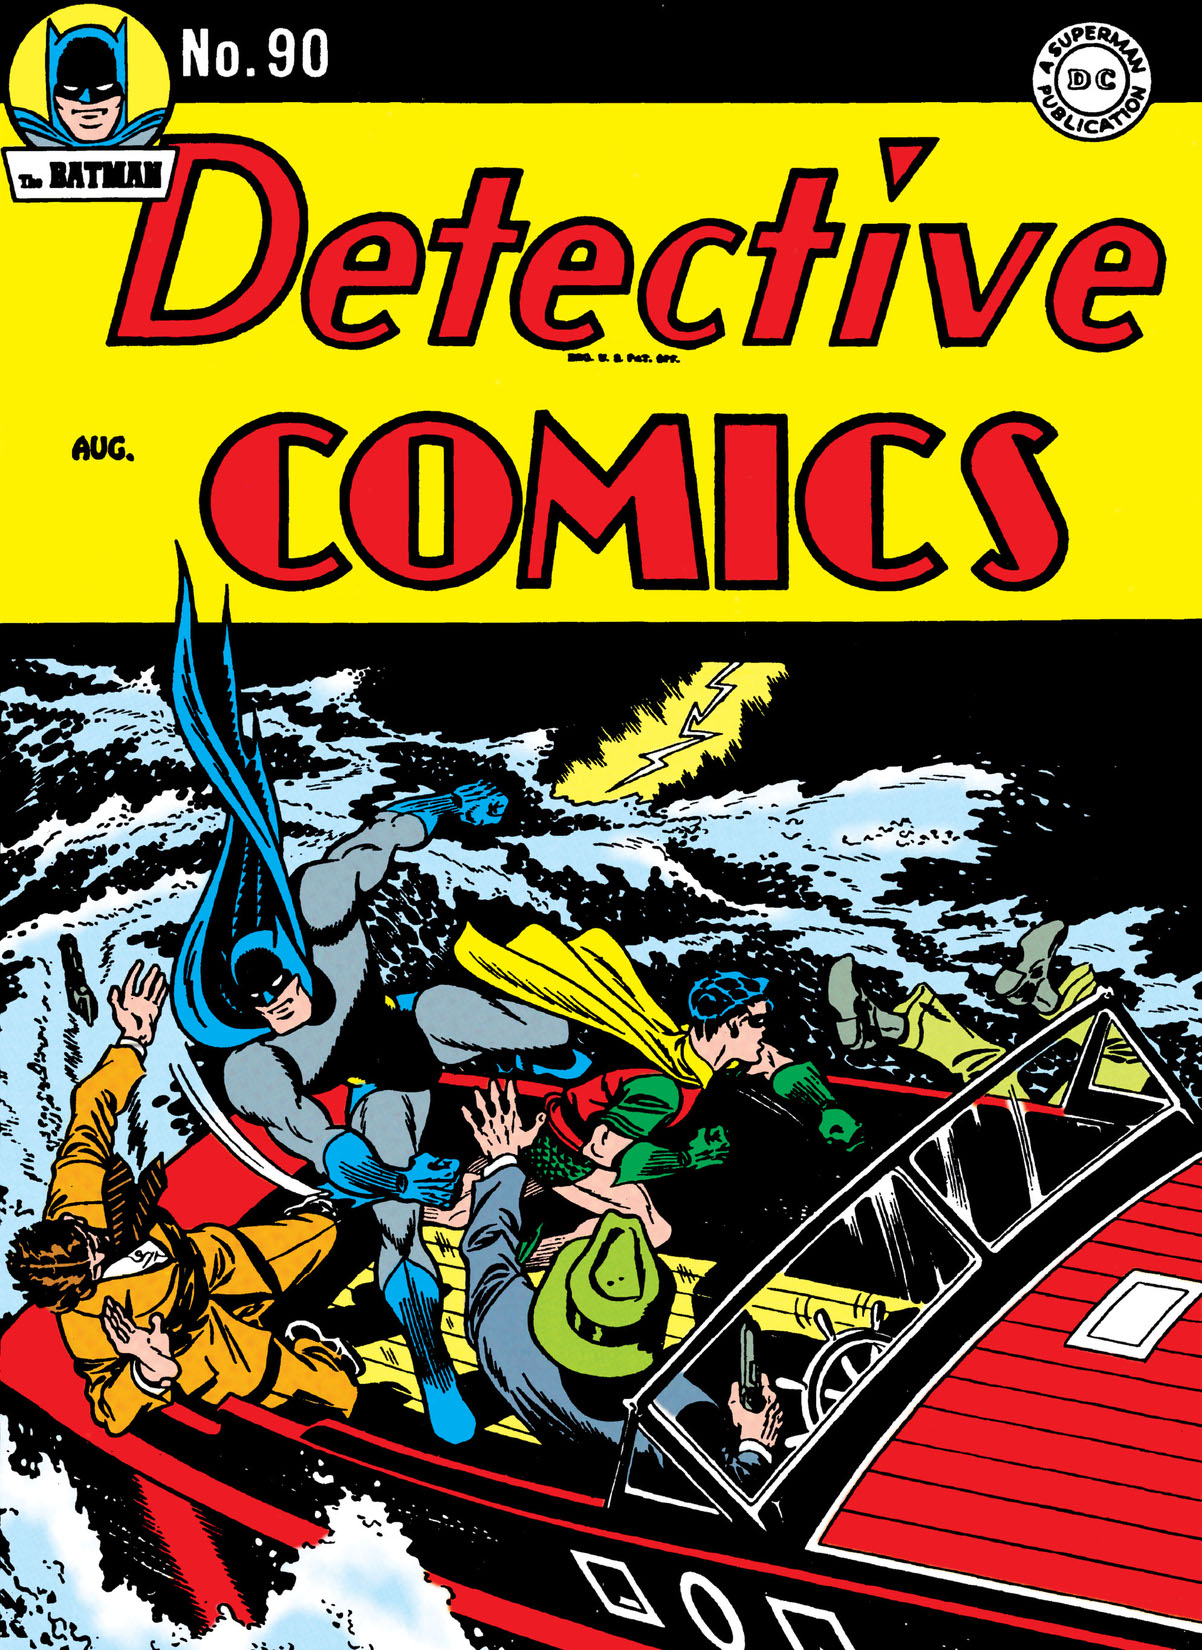 Detective Comics (1937-) #90 preview images